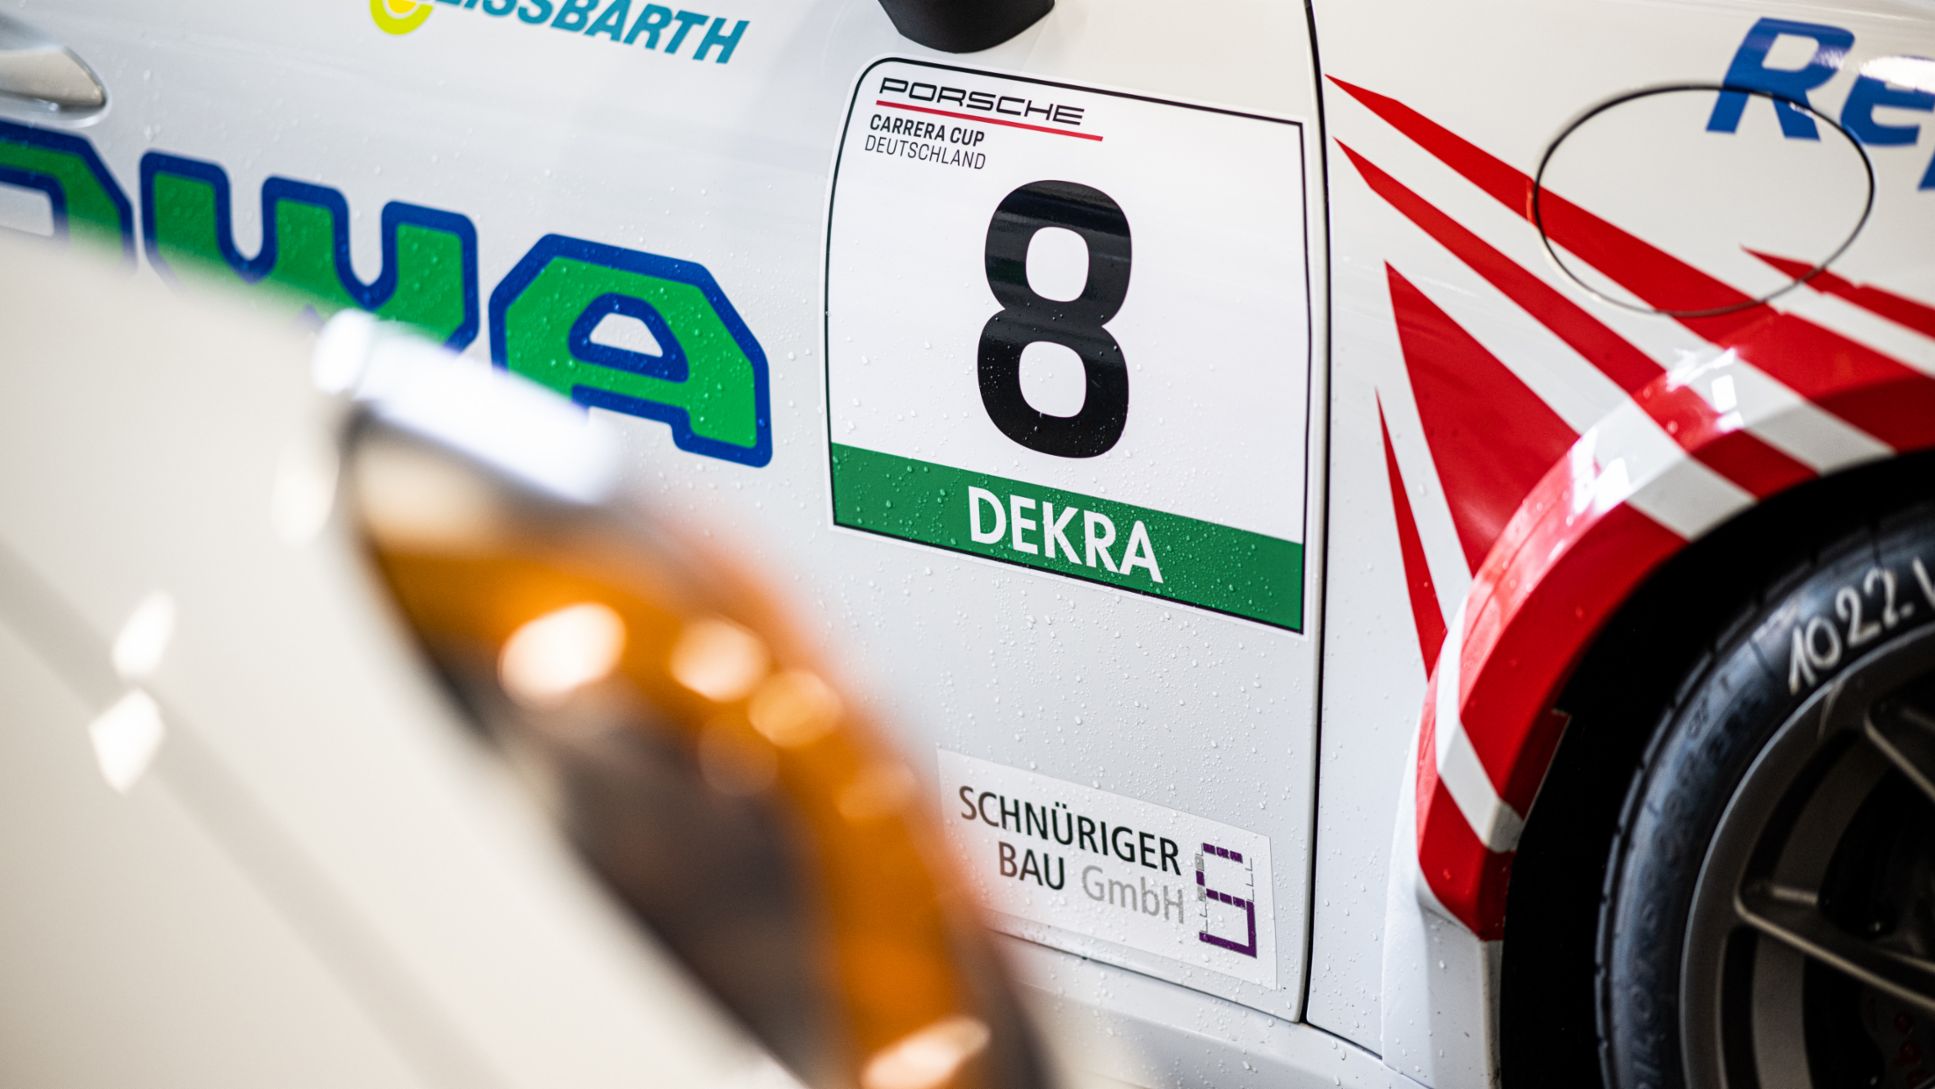 Porsche Carrera Cup Deutschland, DEKRA, 2023, Porsche AG